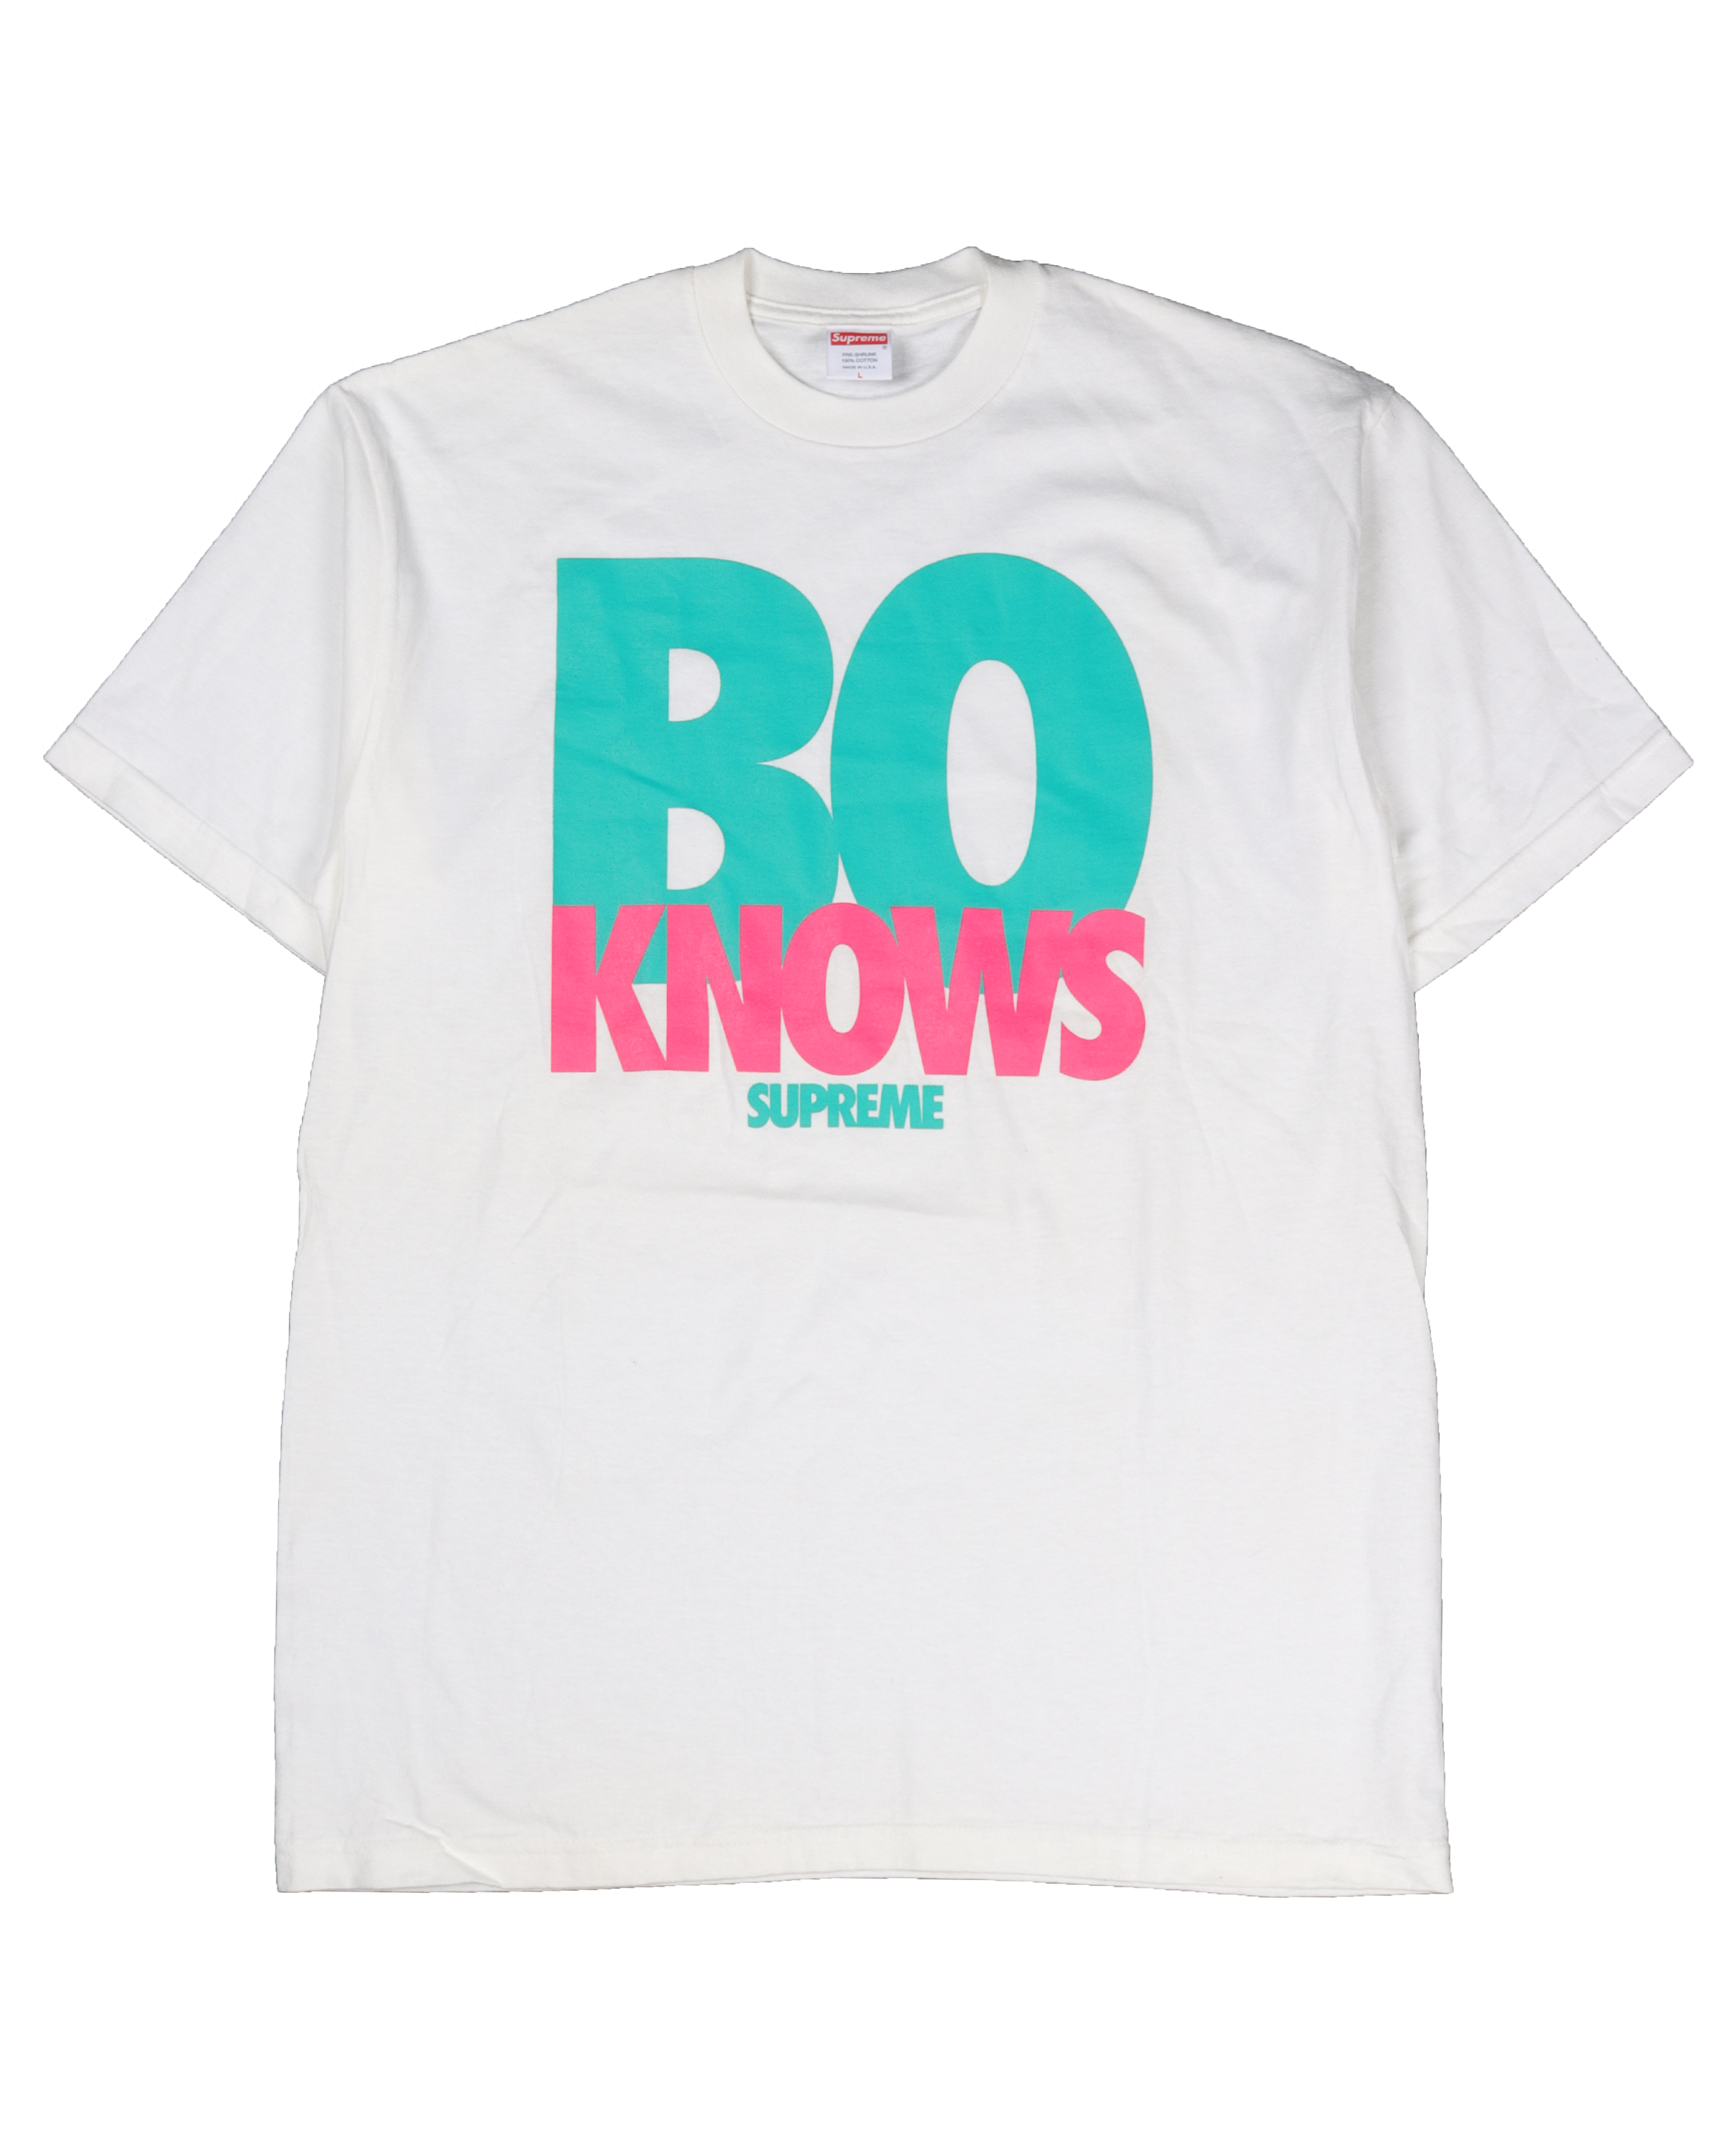 2003 Bo Knows T-Shirt